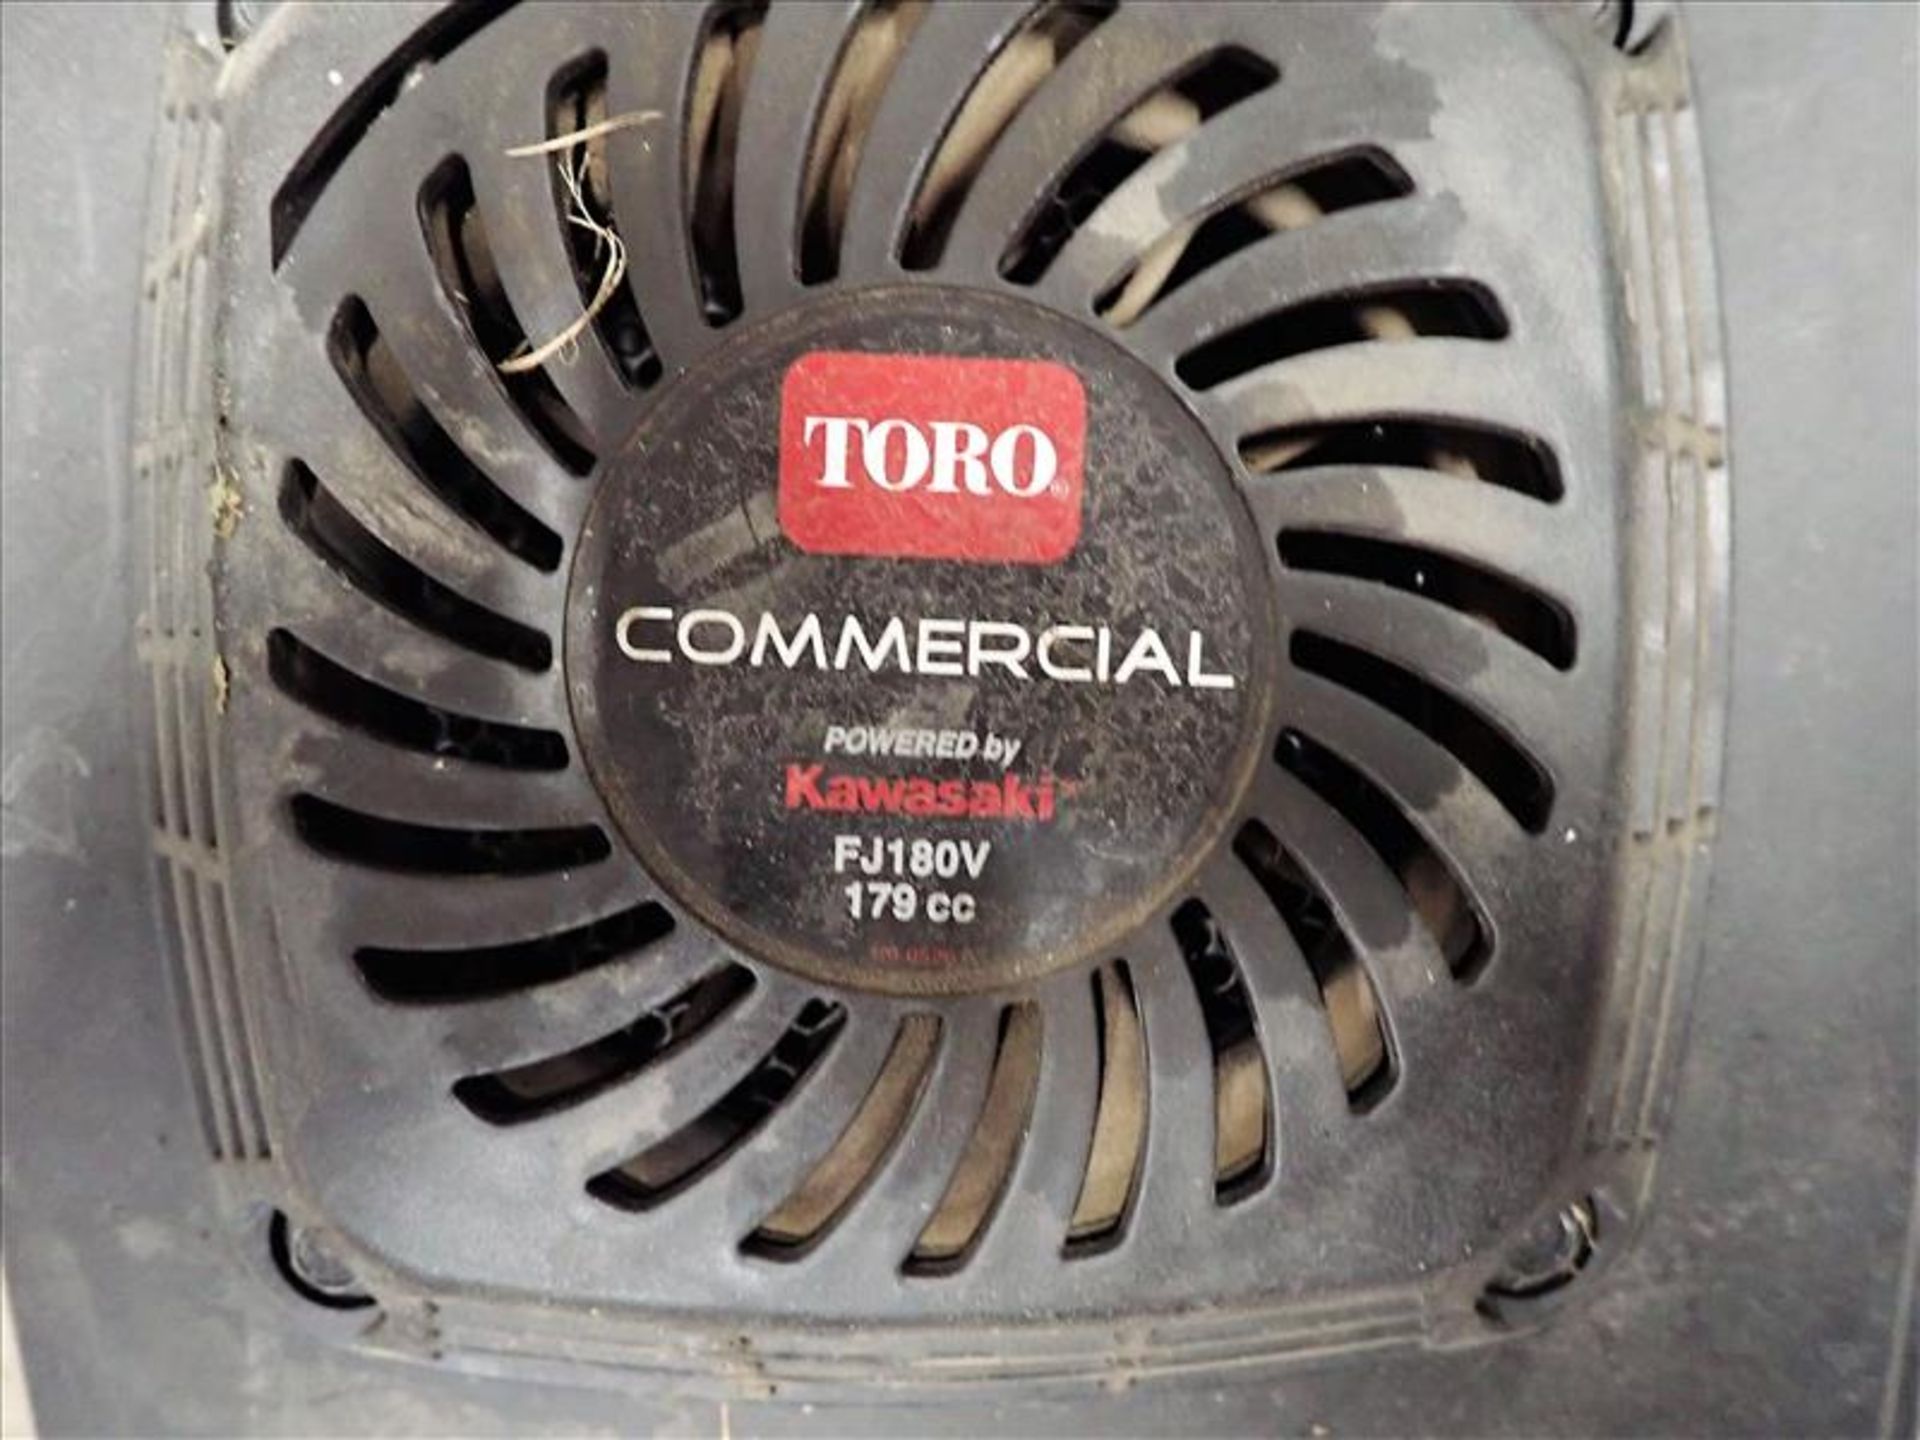 Toro Heavy Duty Commercial Lawn Mower, model 22290, S/N.407169060, w/Kawasaki FJ180V engine, - Image 3 of 3